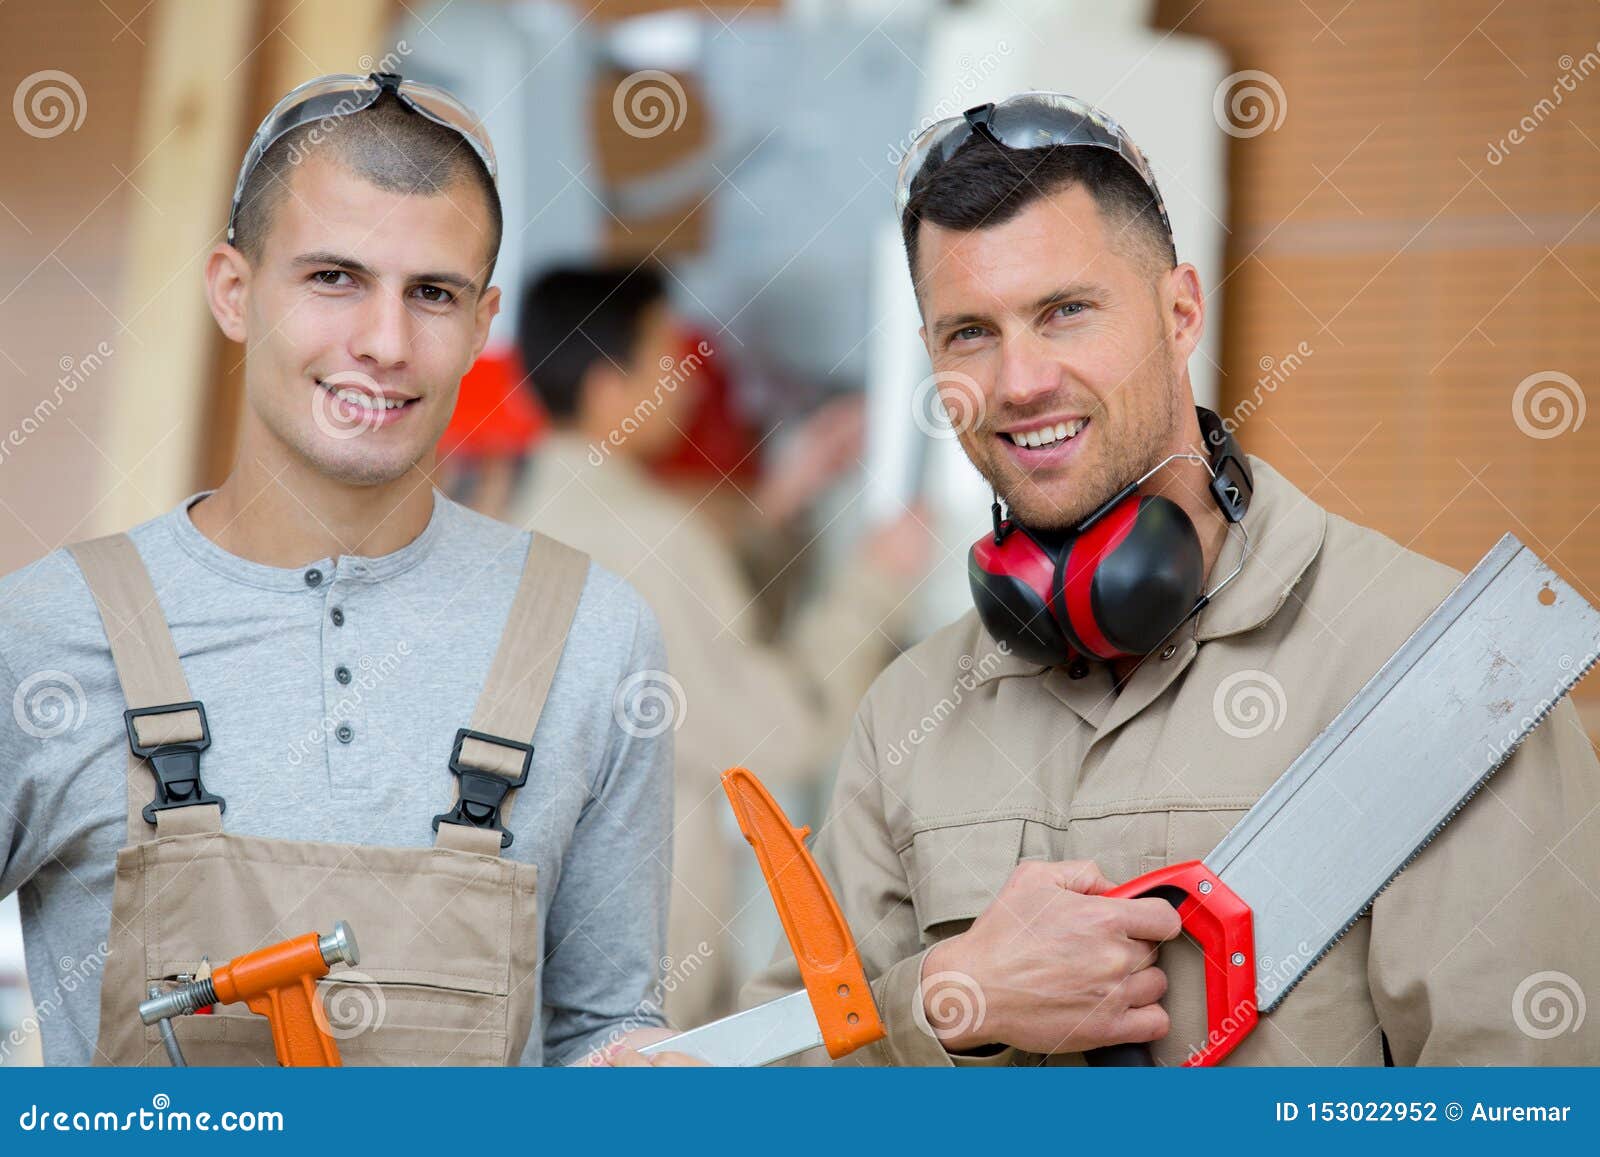 two carpenters posing to camera